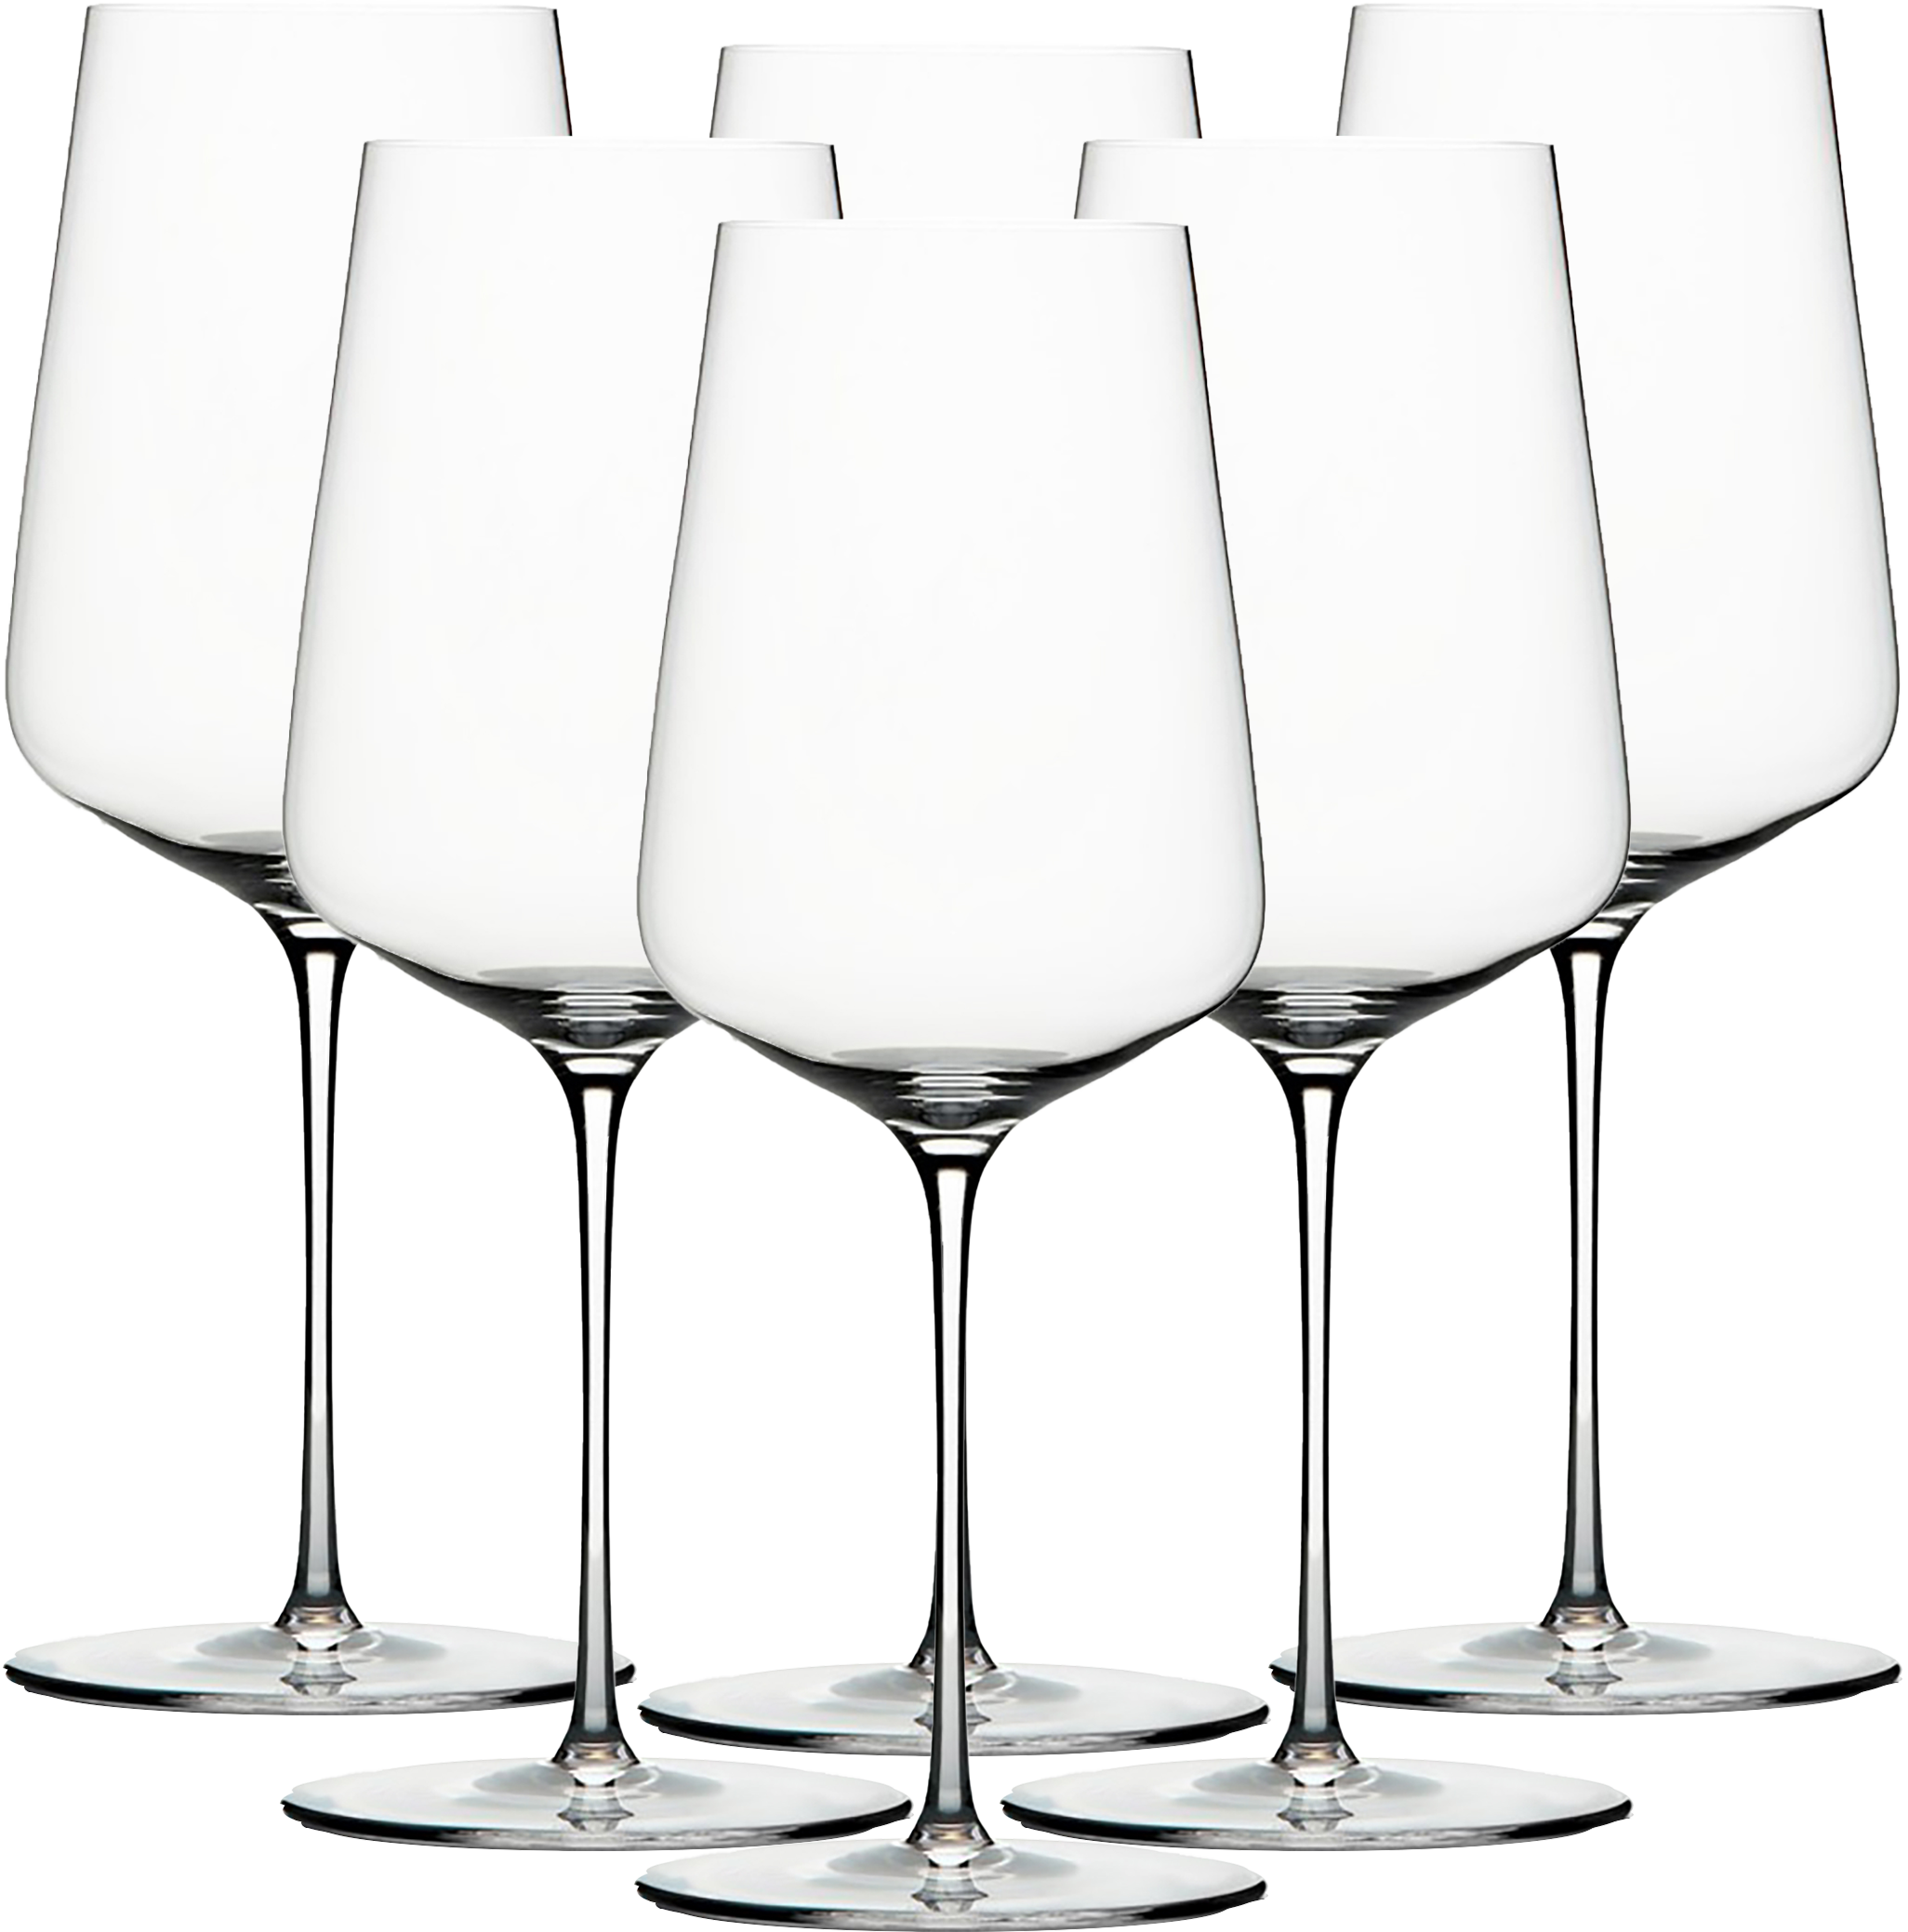 Zalto Universal Wine Glass (Pack of 6)